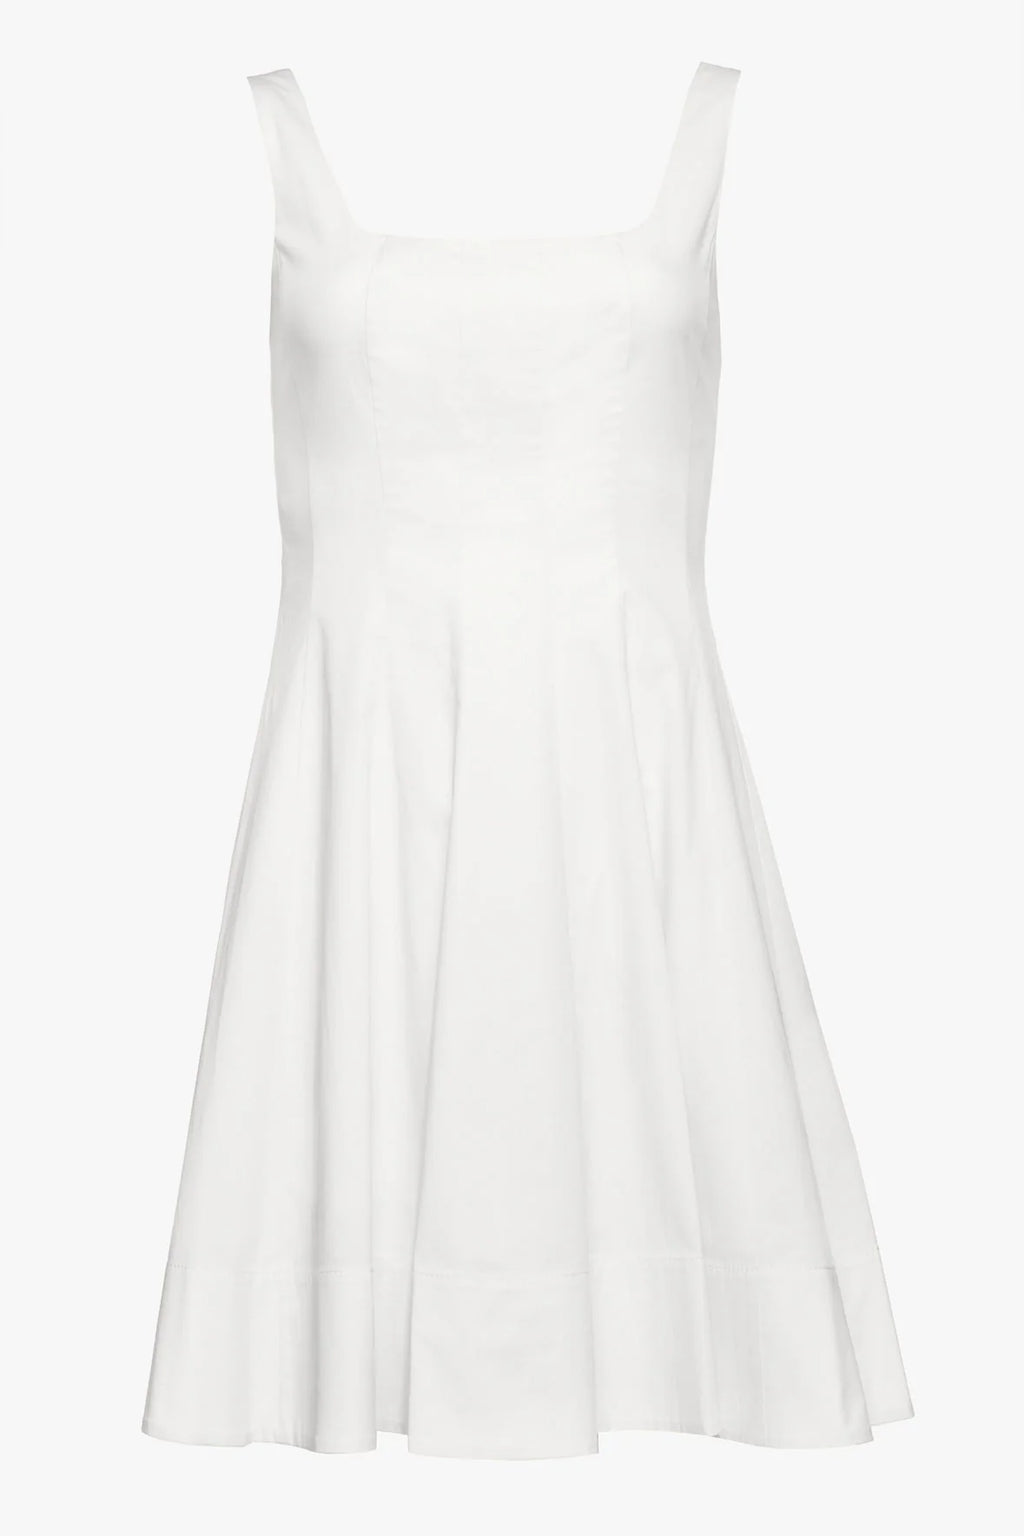 Mini Wells Dress White